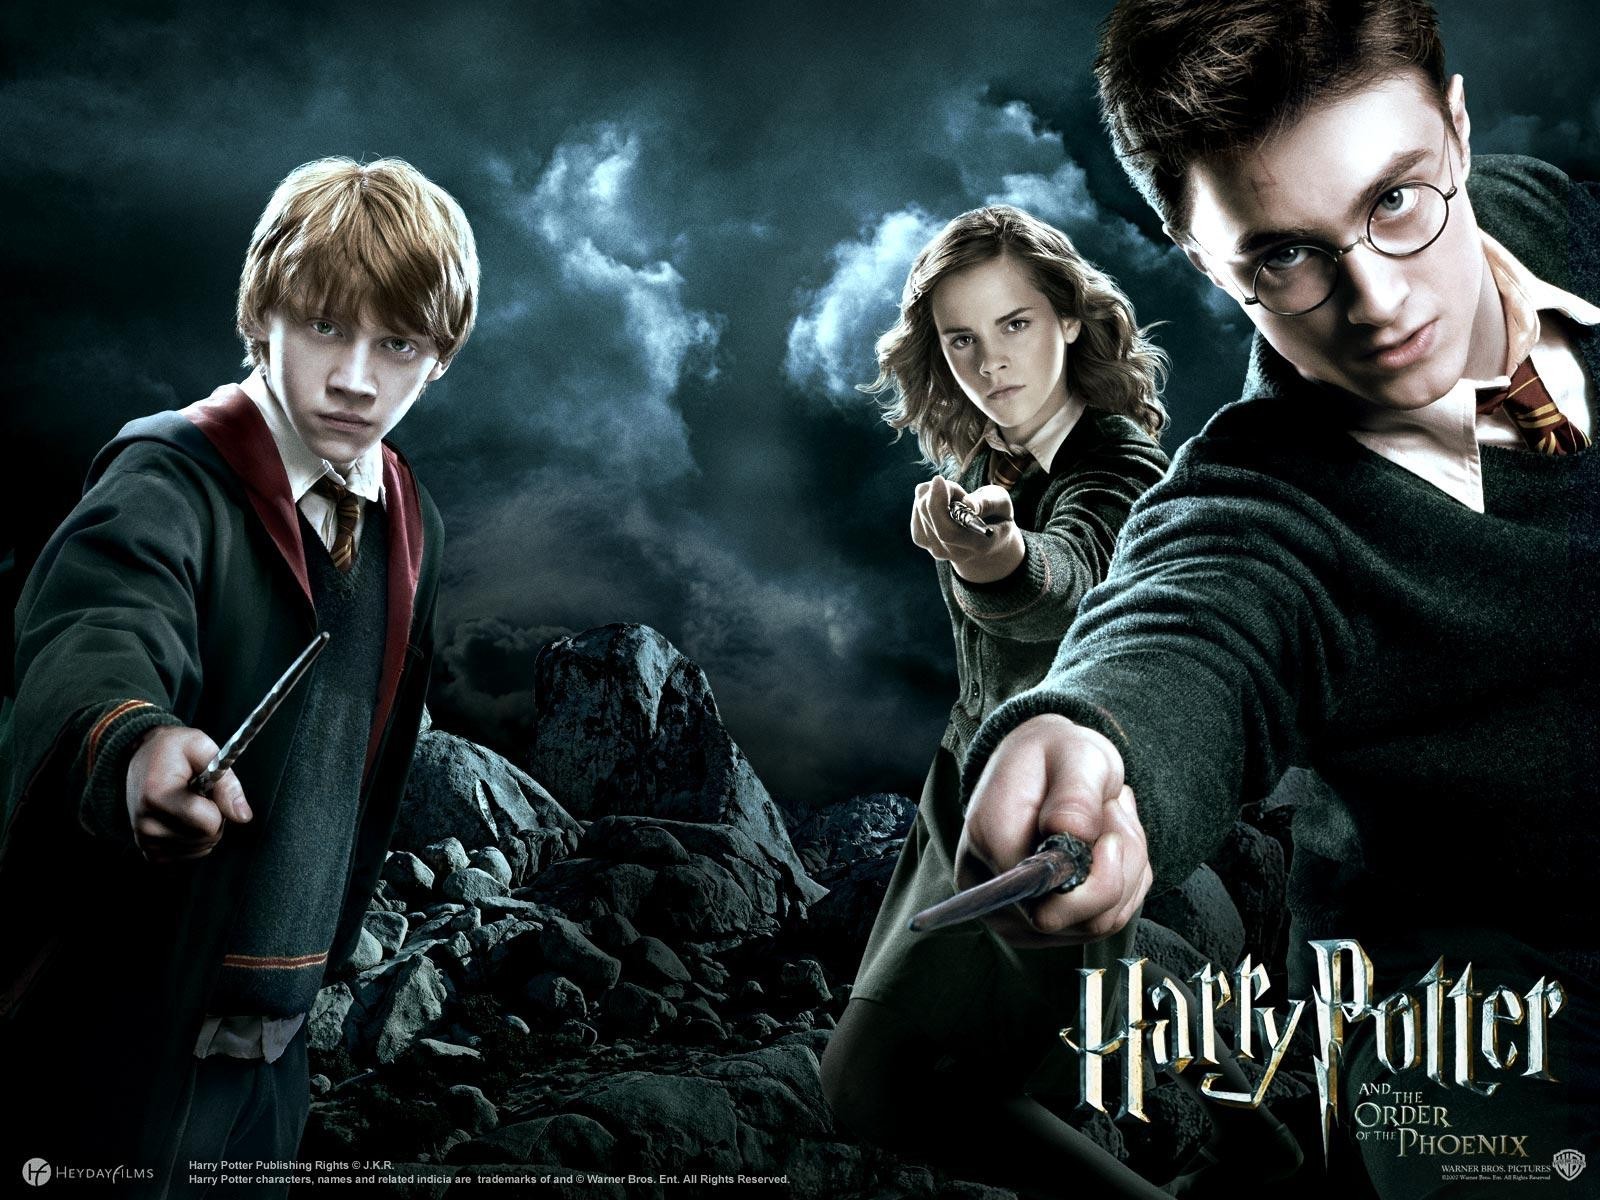 http://2.bp.blogspot.com/-BHqWu4D_Lfg/TiKD11HmTJI/AAAAAAAAAG8/743Yar37bUs/s1600/Harry-Potter-And-The-Deathly-Hallows-Part-2.jpg